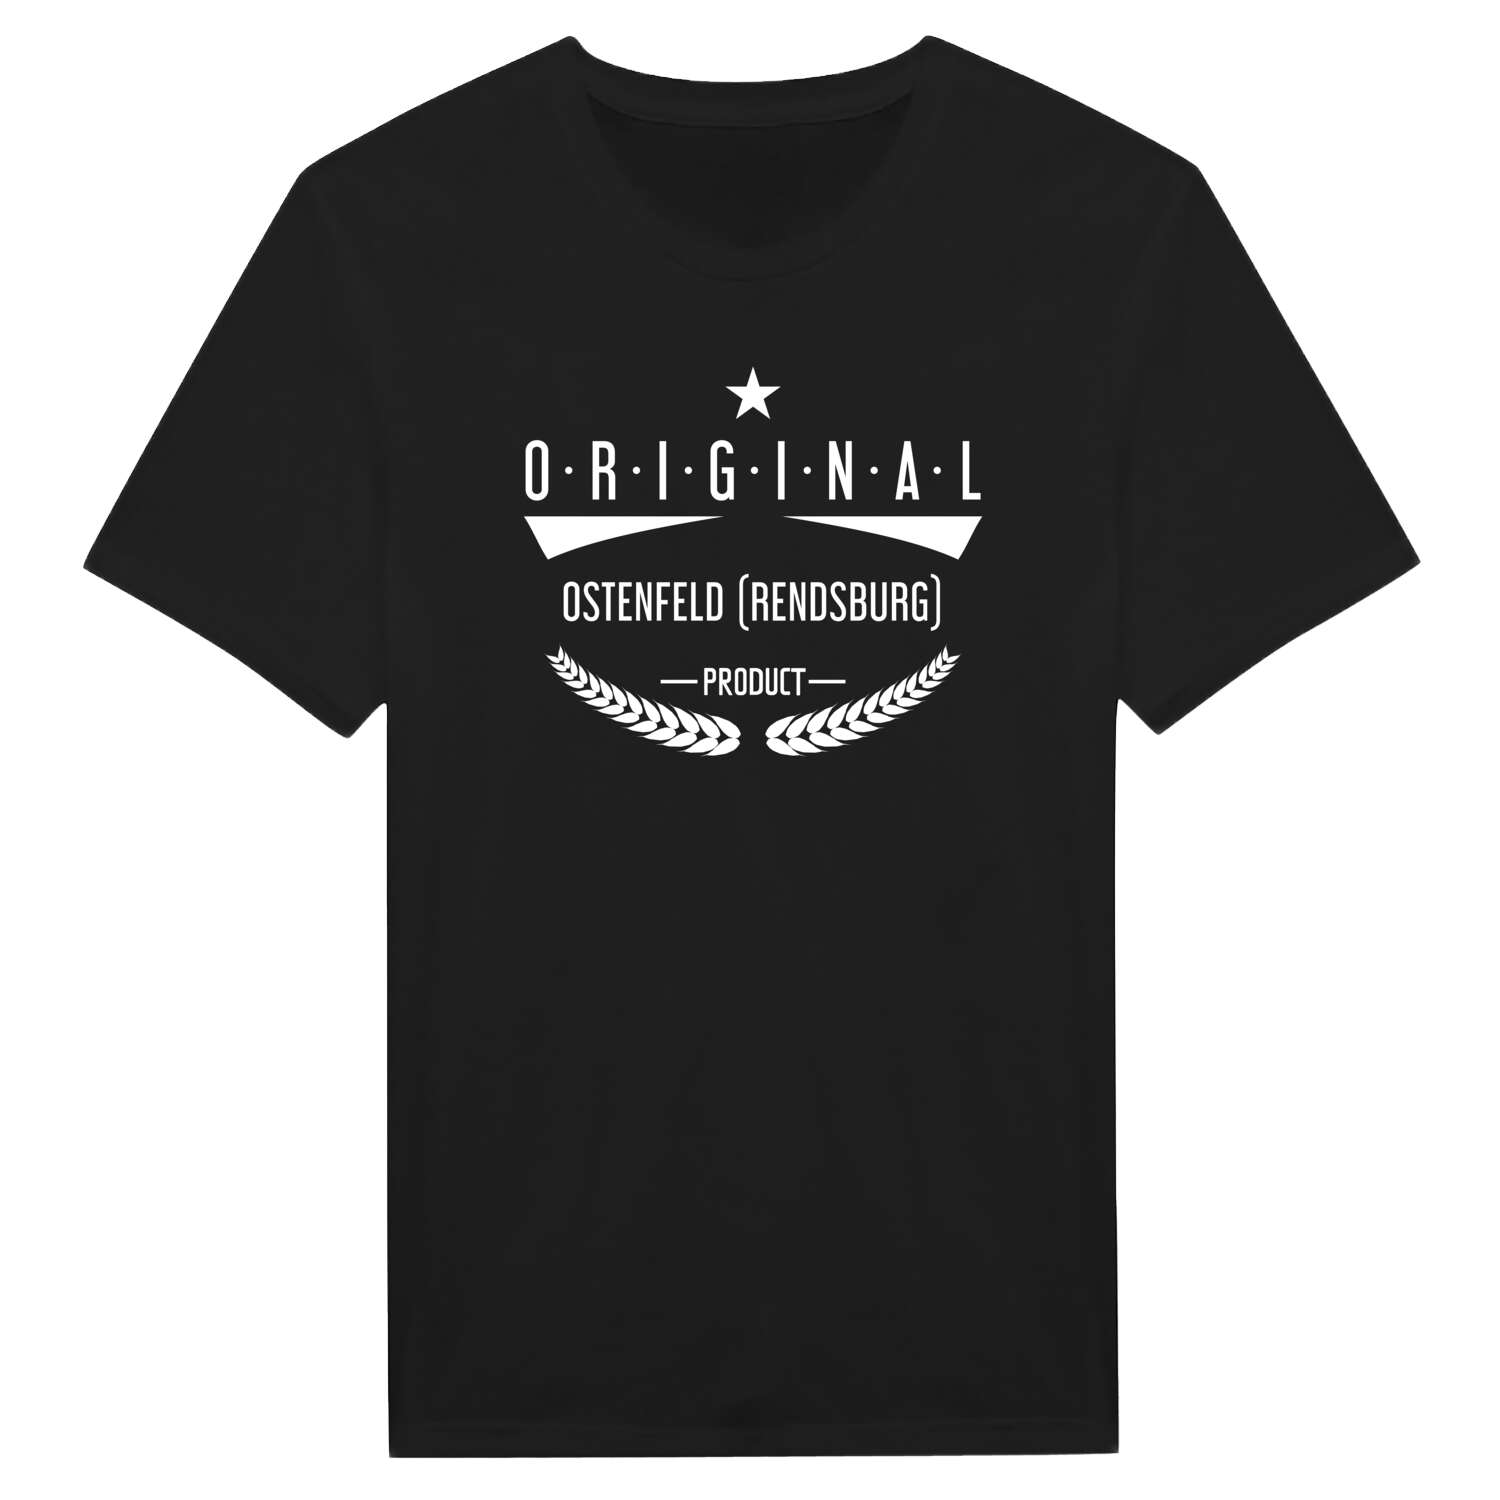 Ostenfeld (Rendsburg) T-Shirt »Original Product«